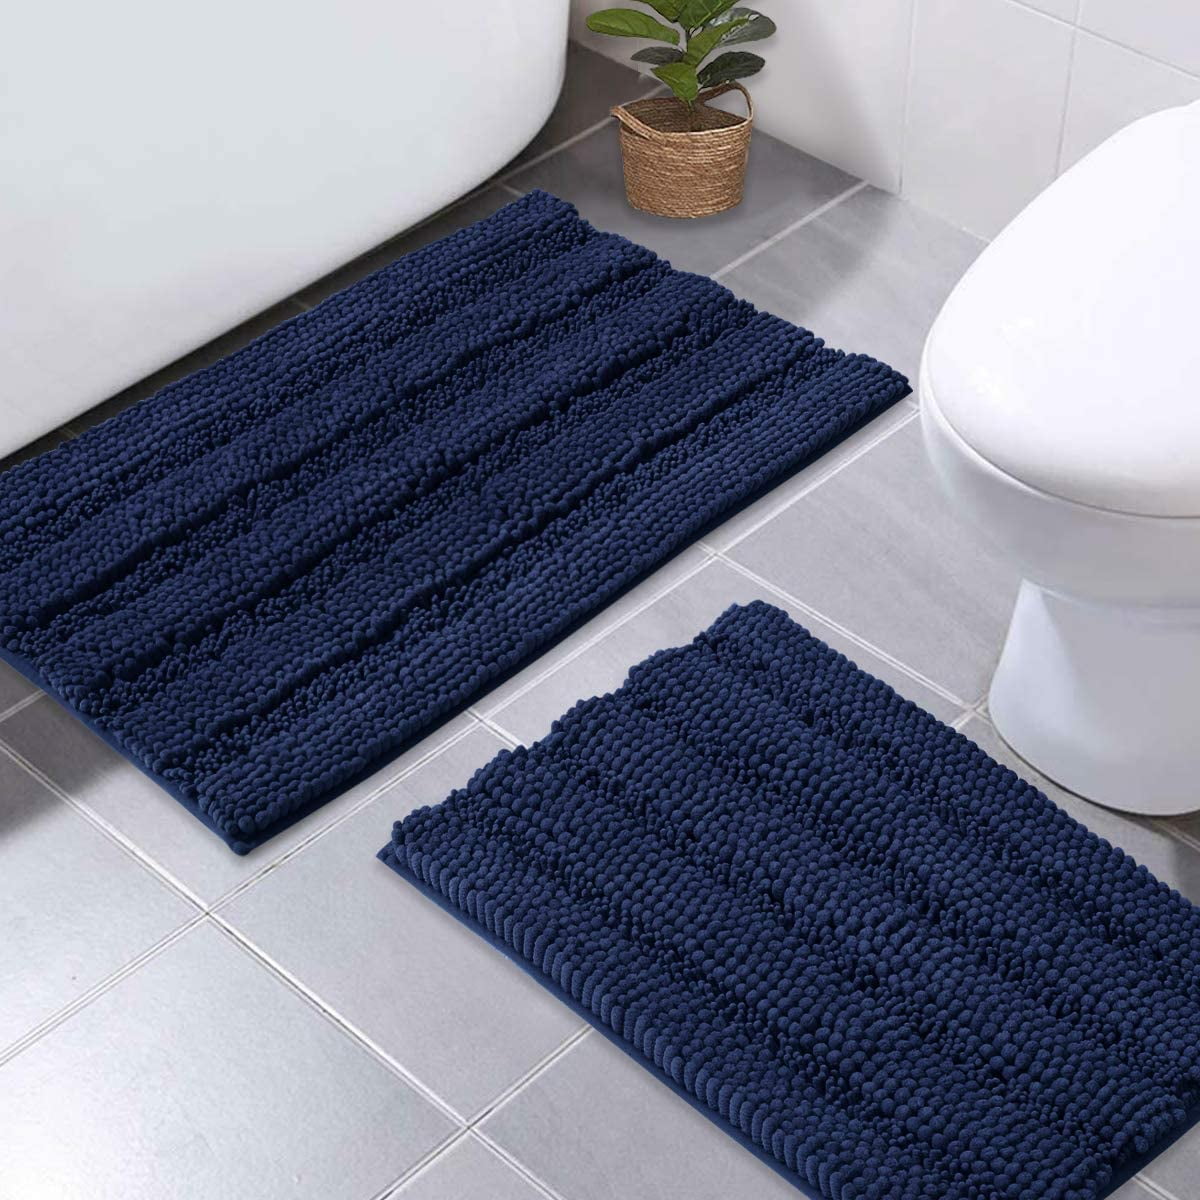 Dark Blue and White Stripes Bathroom Flannel Rug Non-Slip Floor Door Mat 16x24" 